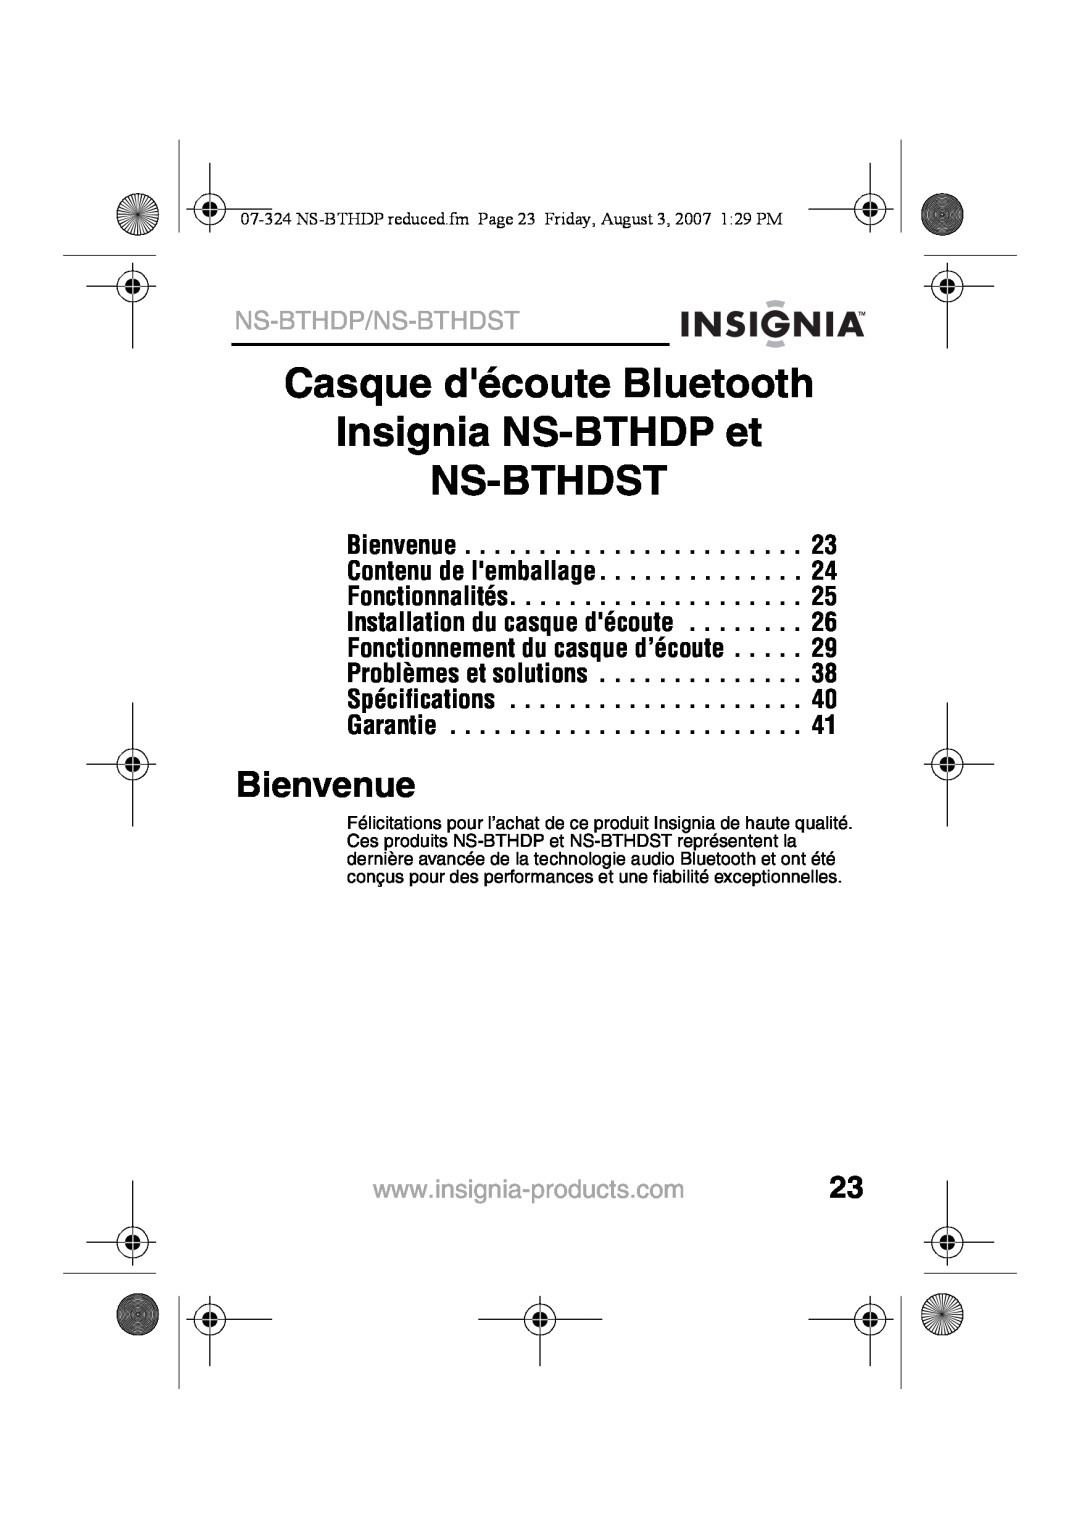 Insignia NS-BTHDST manual Casque découte Bluetooth Insignia NS-BTHDPet, Bienvenue, Ns-Bthdp/Ns-Bthdst 